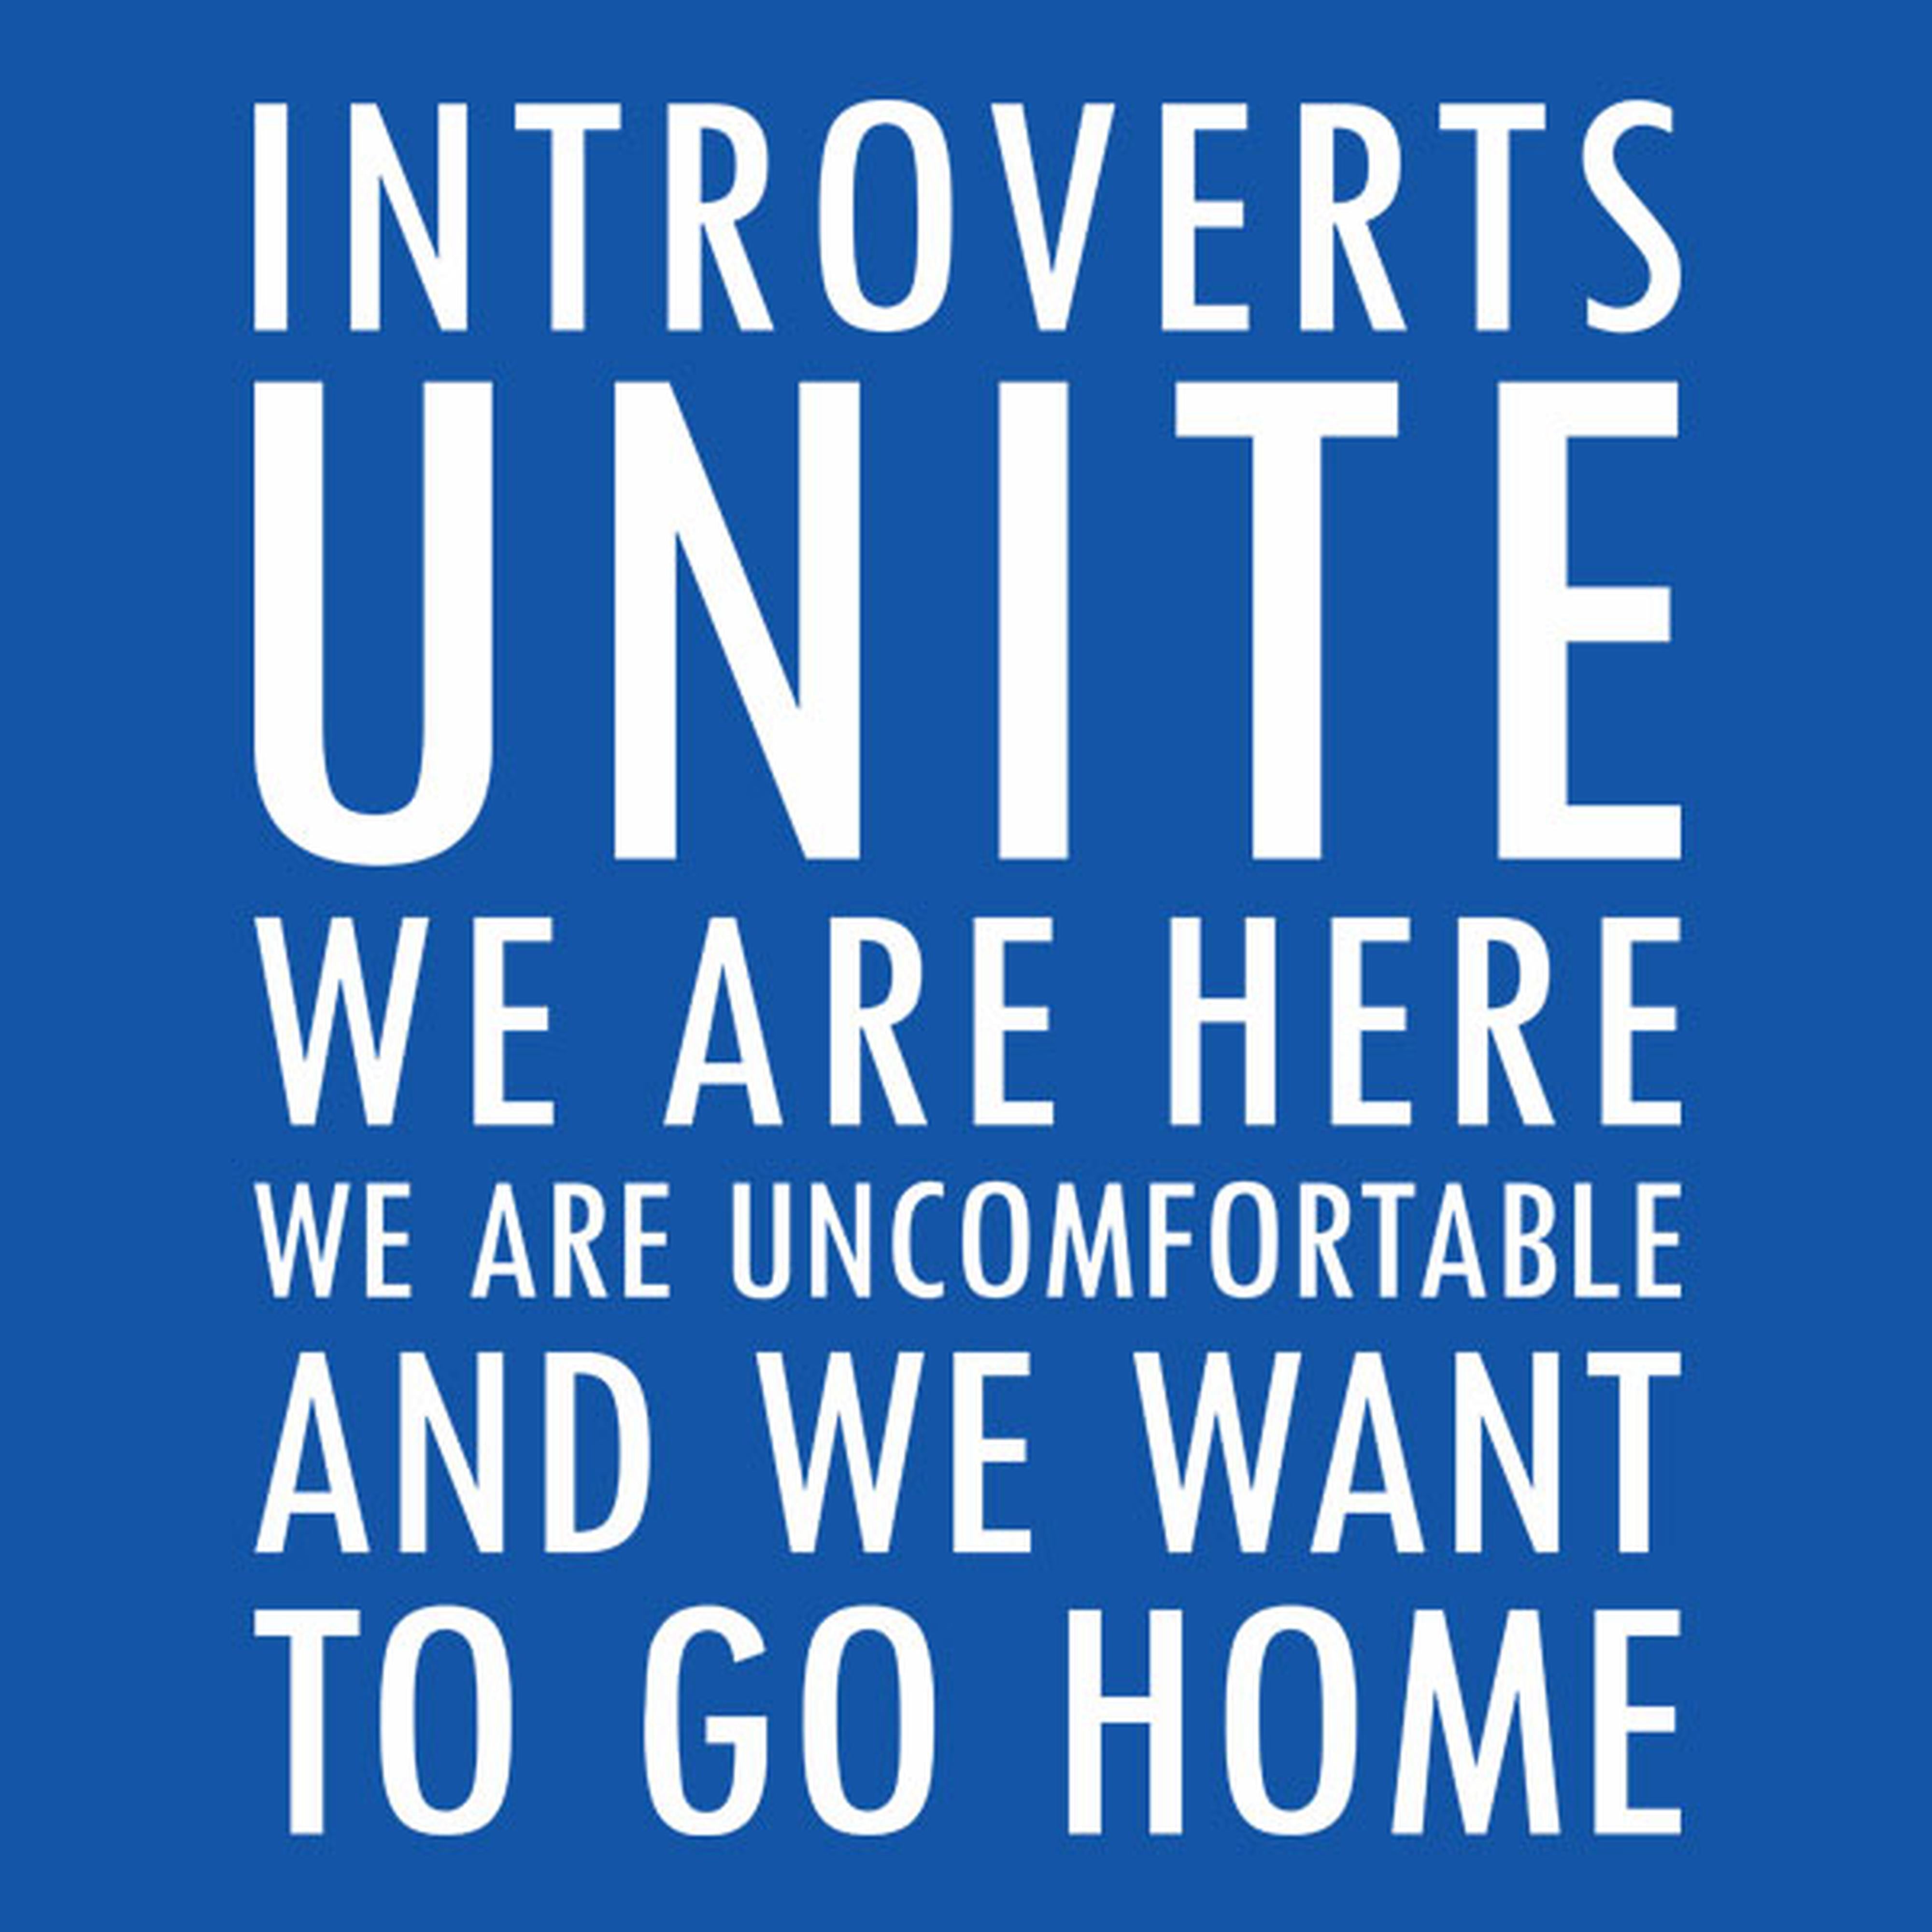 Introverts unite! - T-shirt